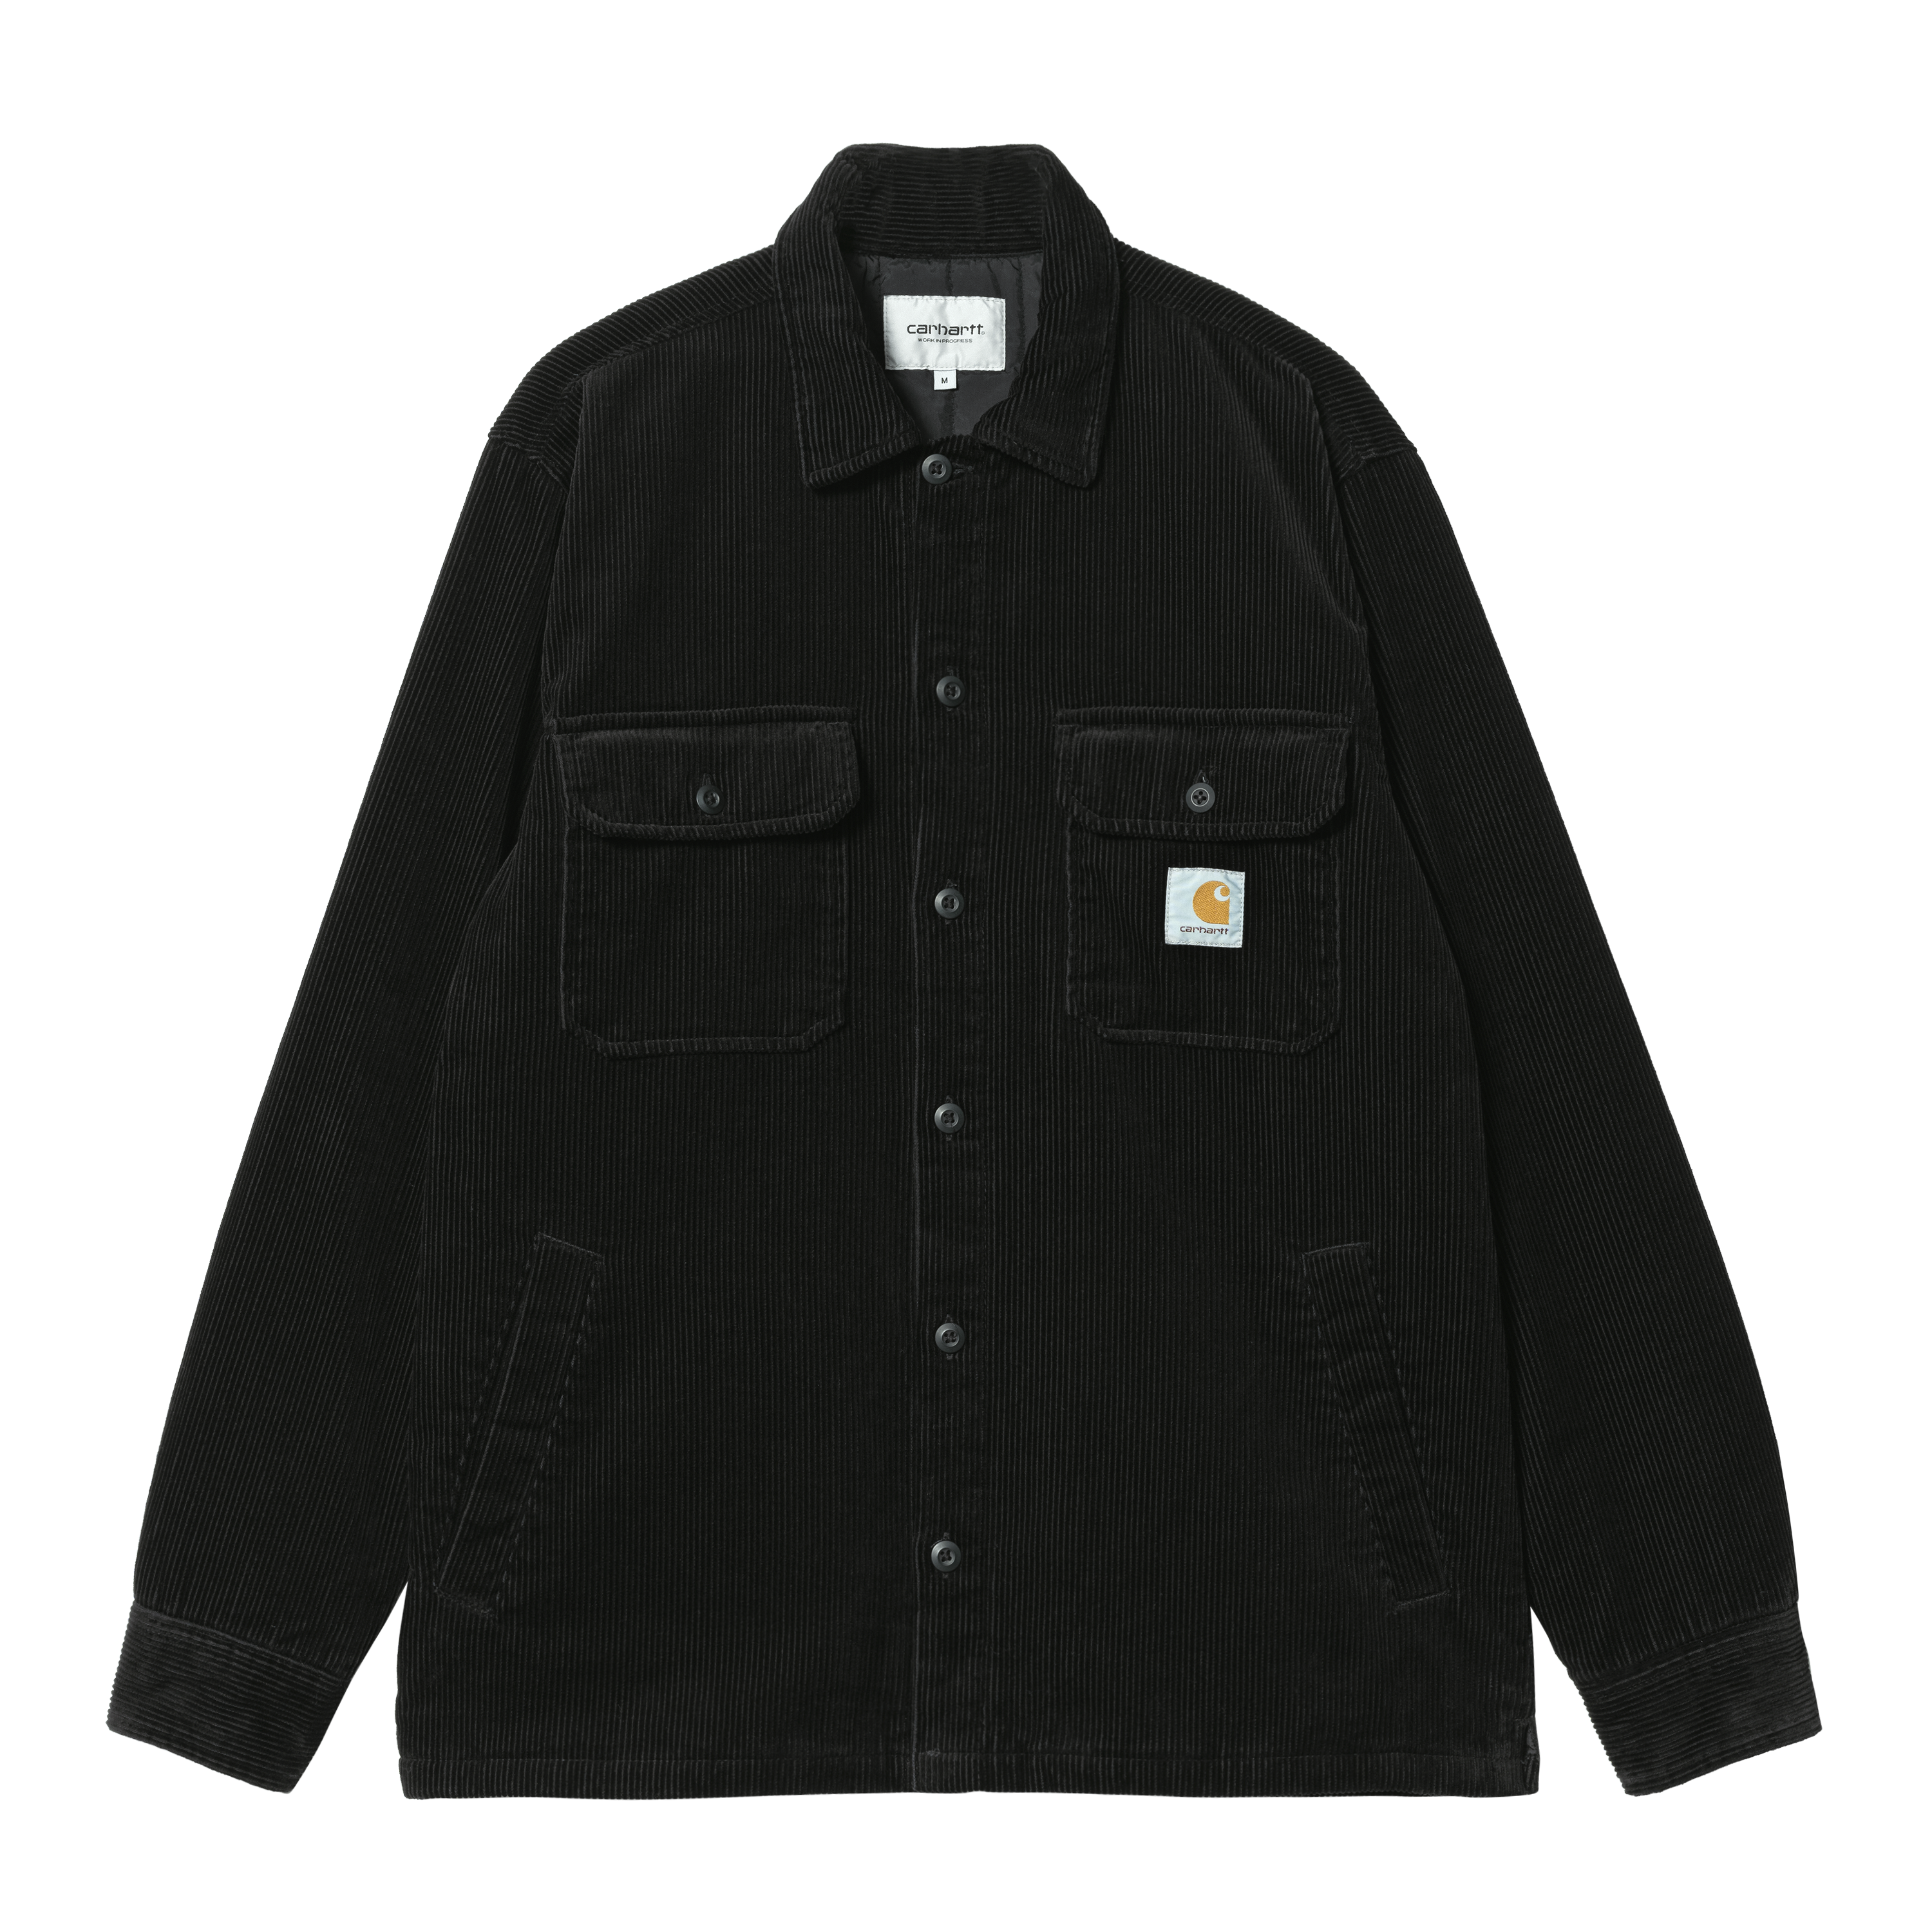 Carhartt WIP Whitsome Shirt Jac in Black